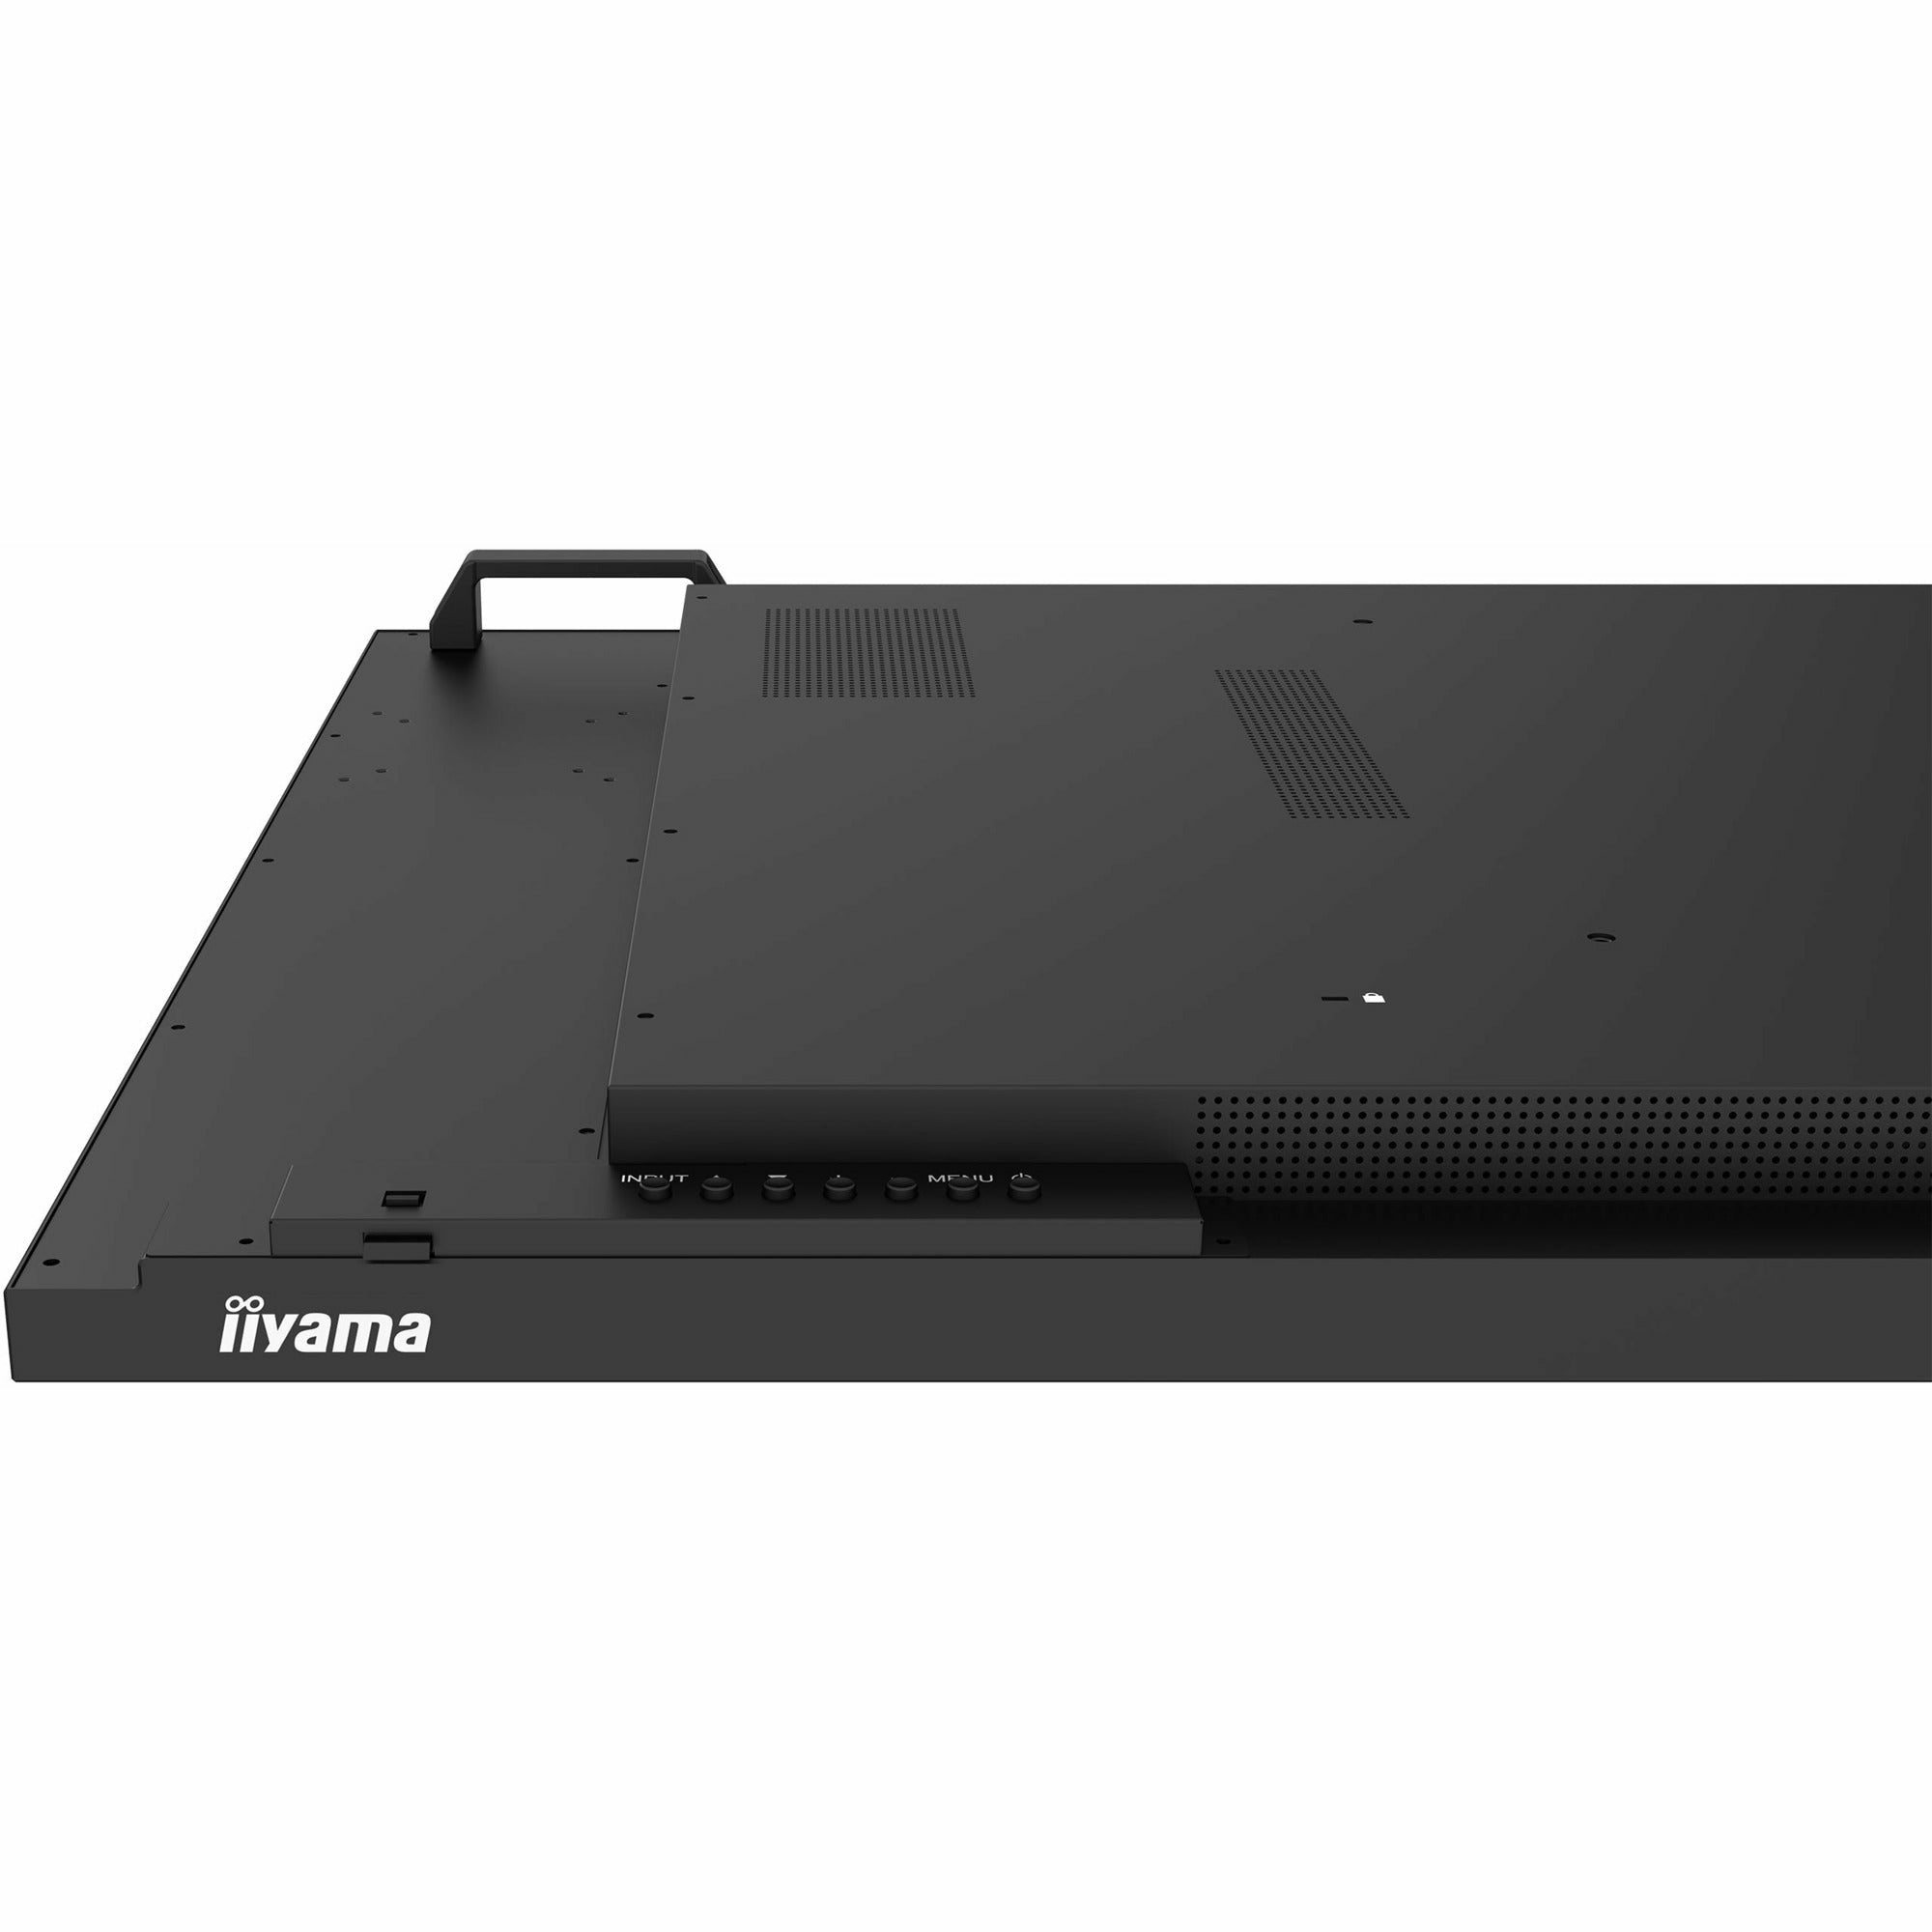 Iiyama ProLite LH5551UHSB-B1 55" IPS 4K UHD Professional 24/7 Digital Signage Display with Intel SDM Slot